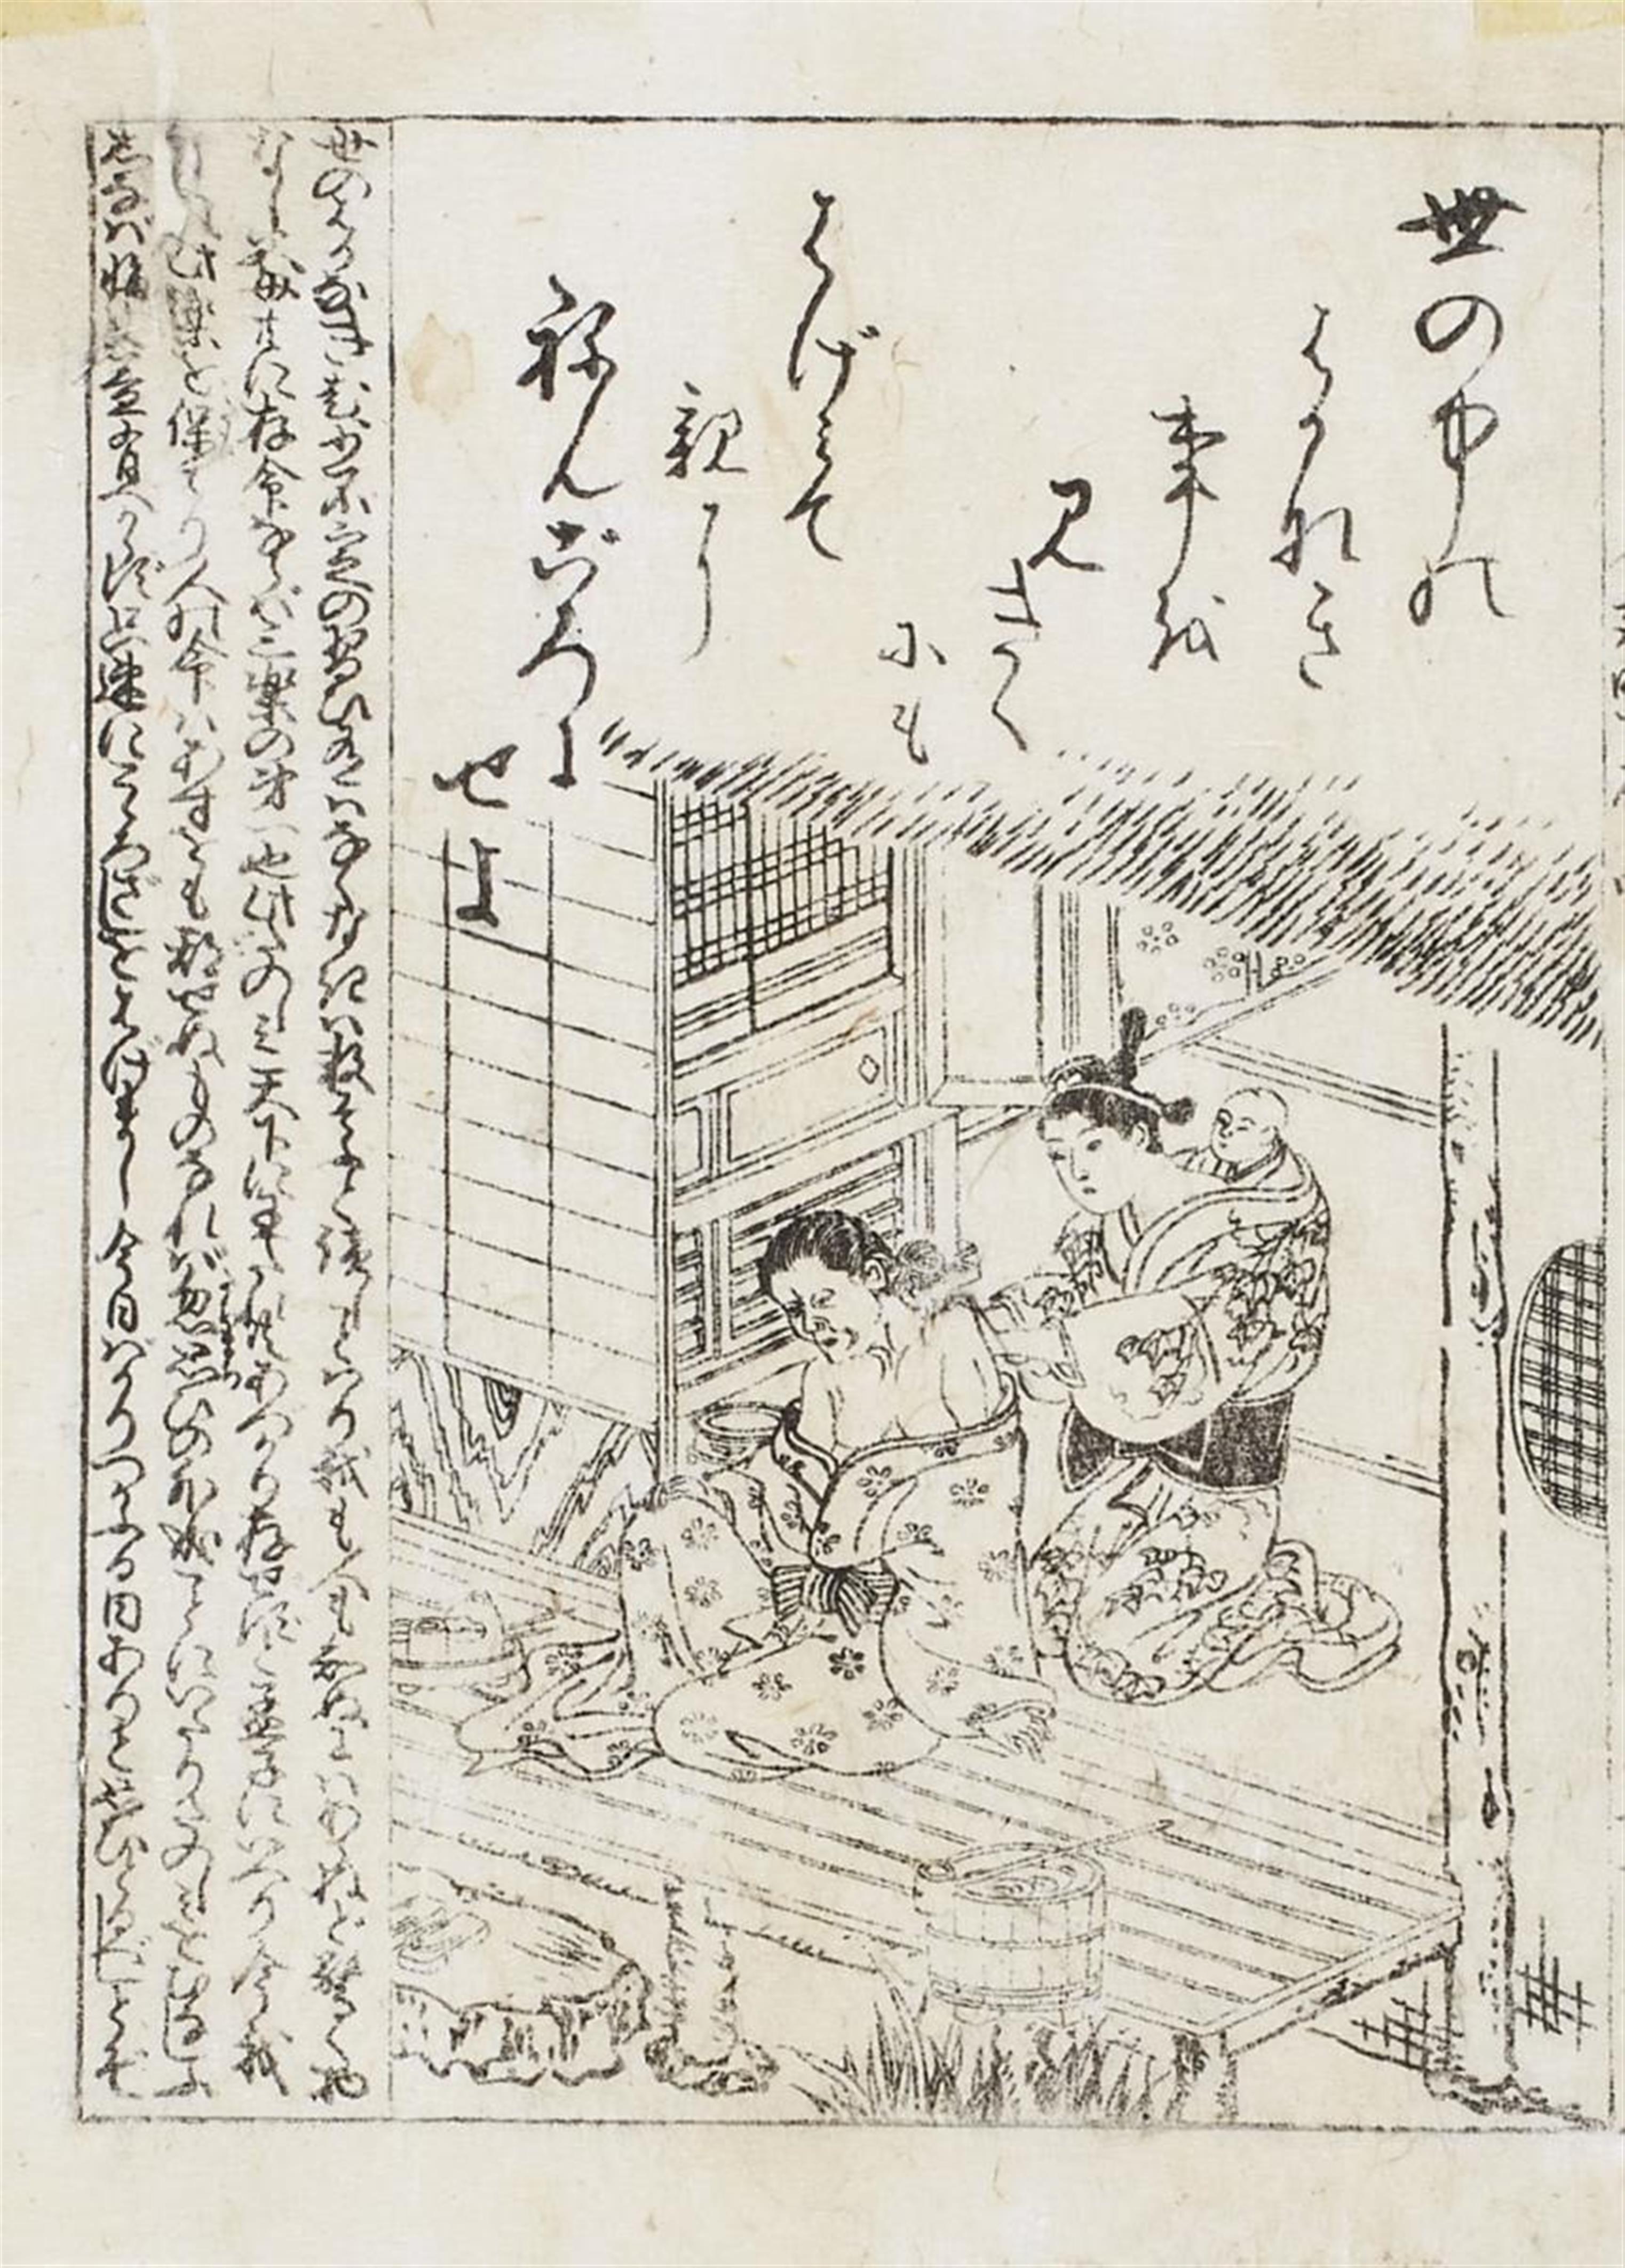 Sukenobu Nishikawa
other artists - Nishikawa Sukenobu (1671-1751) and other artists of the 18th century - image-2